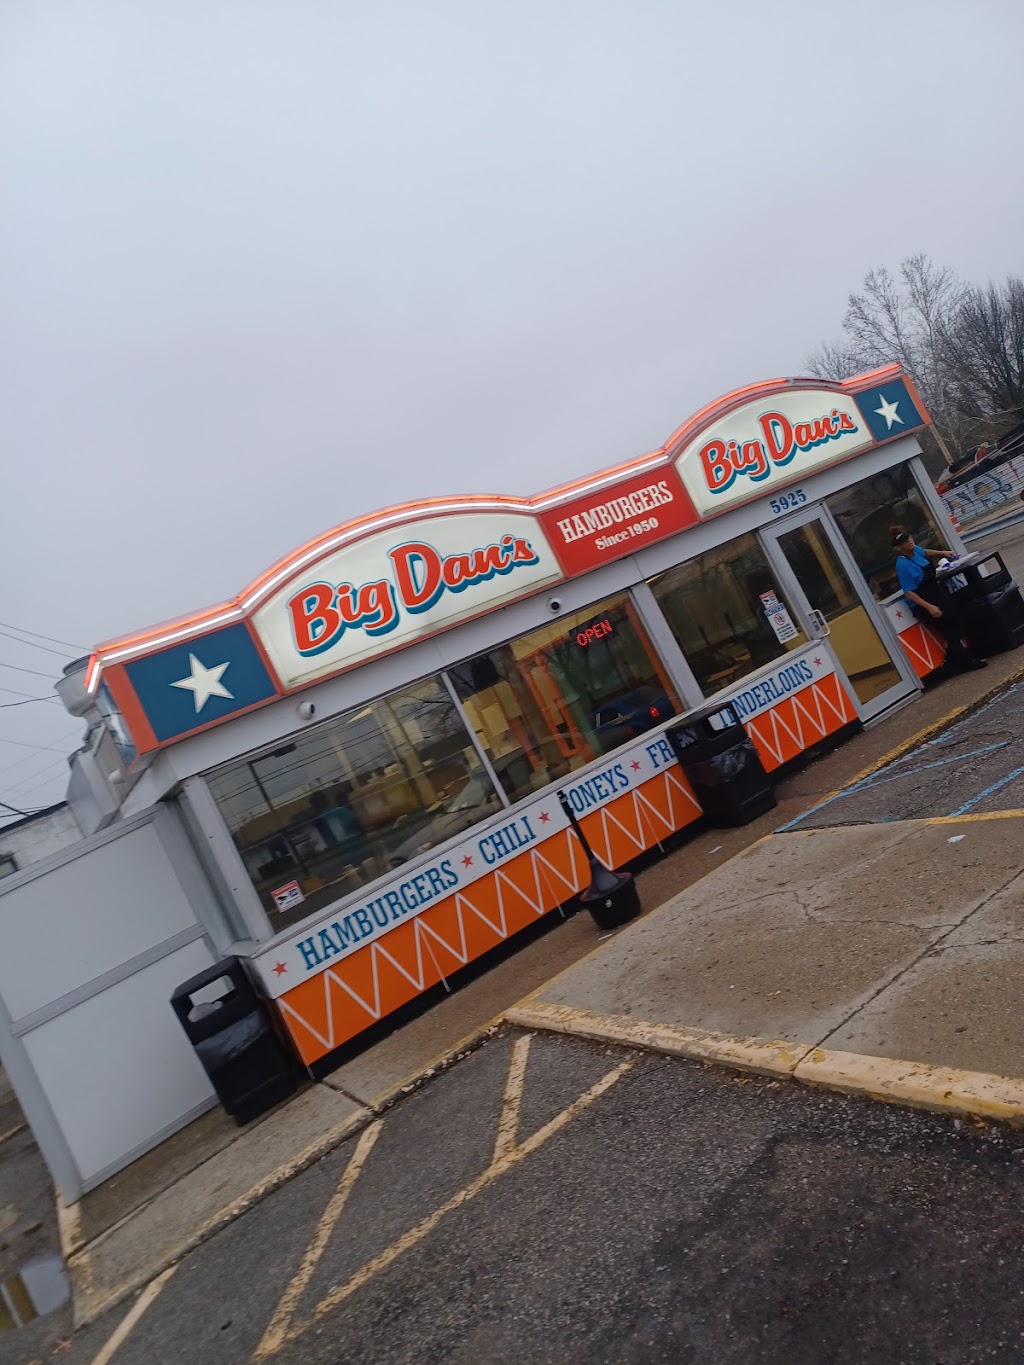 Big Dans Hamburgers | 5925 Massachusetts Ave, Indianapolis, IN 46218, USA | Phone: (317) 547-2254